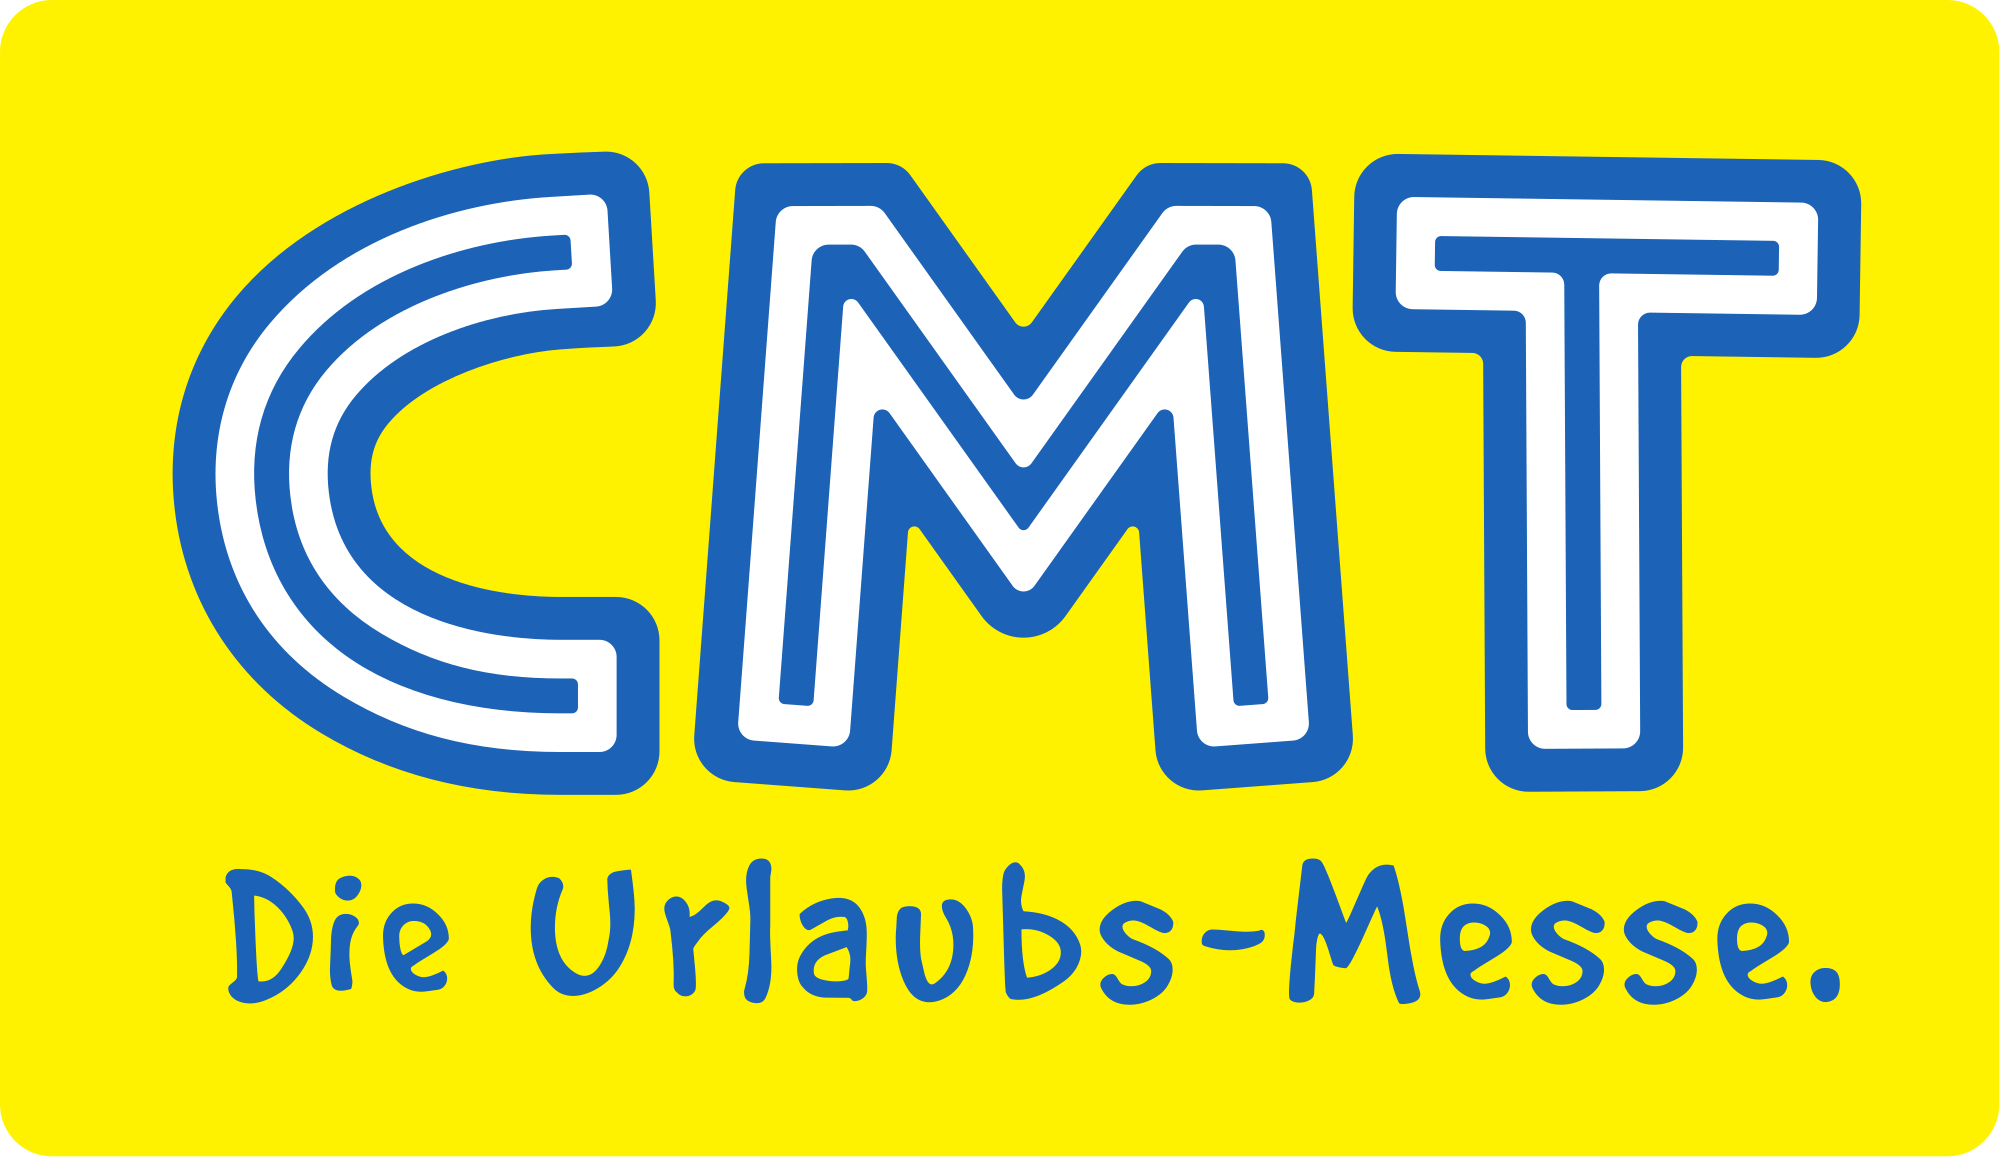 CMT Logo - Cmt logo.svg